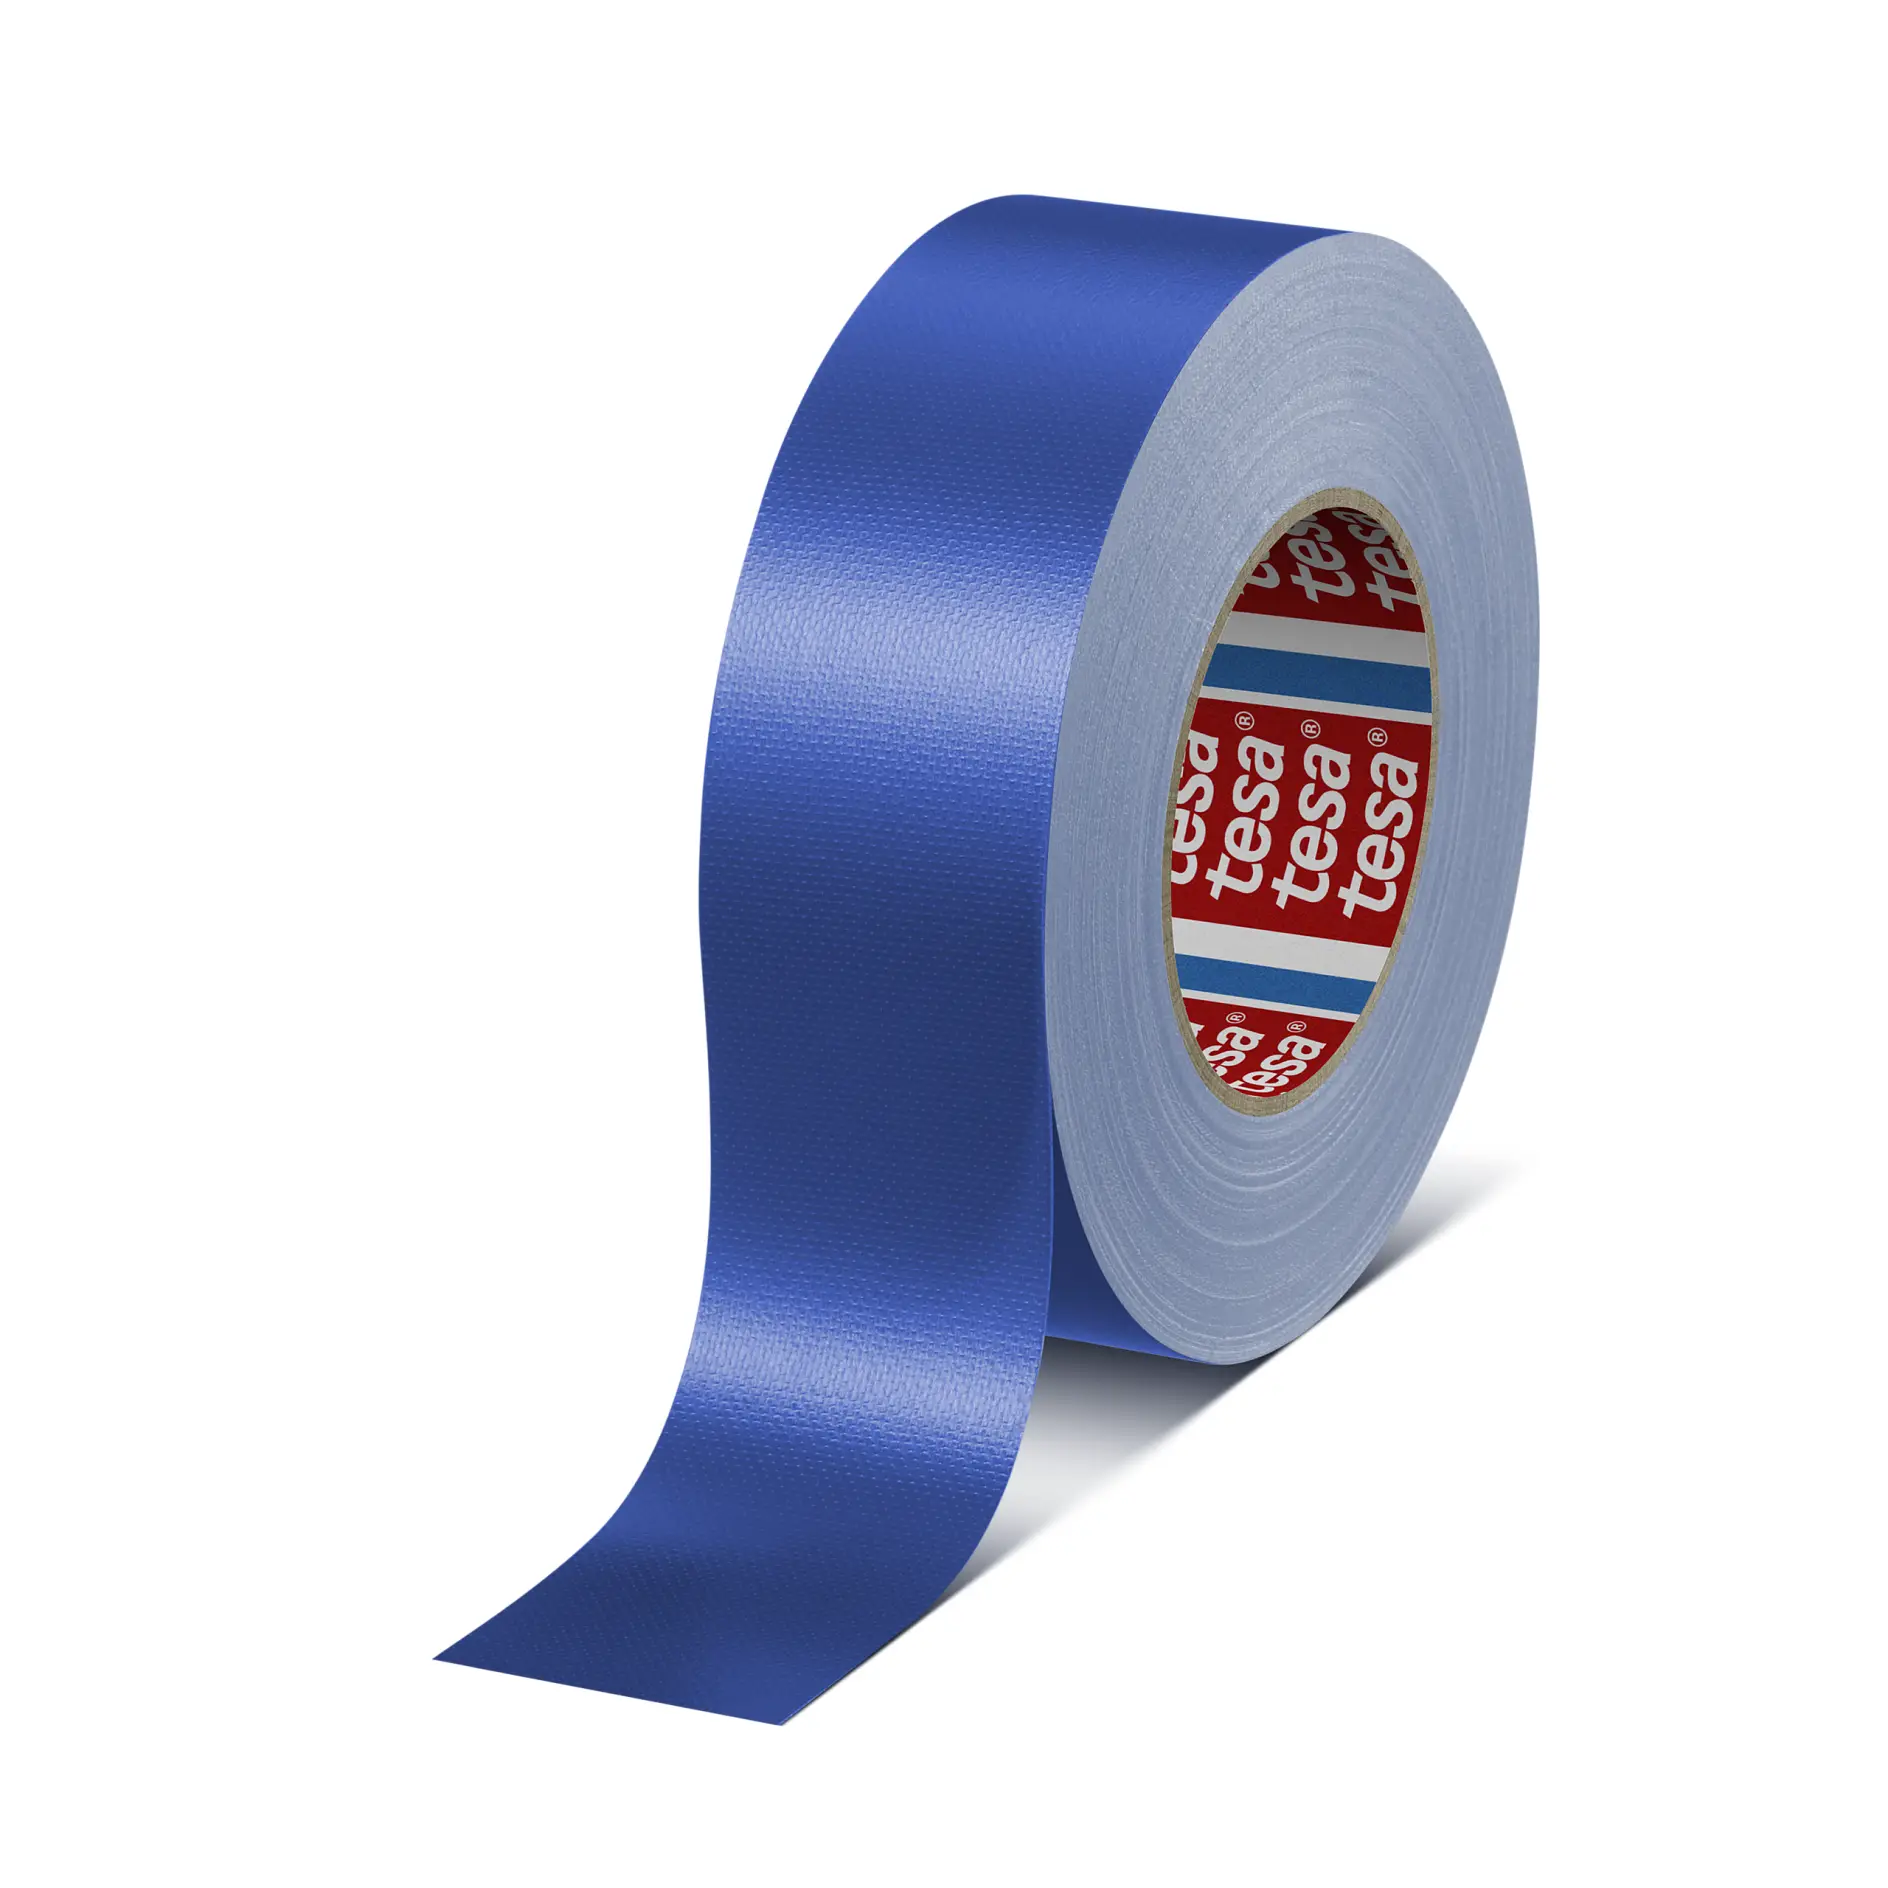 tesa-4688-standard-polyethylene-cloth-tape-blue-046880002300-pr